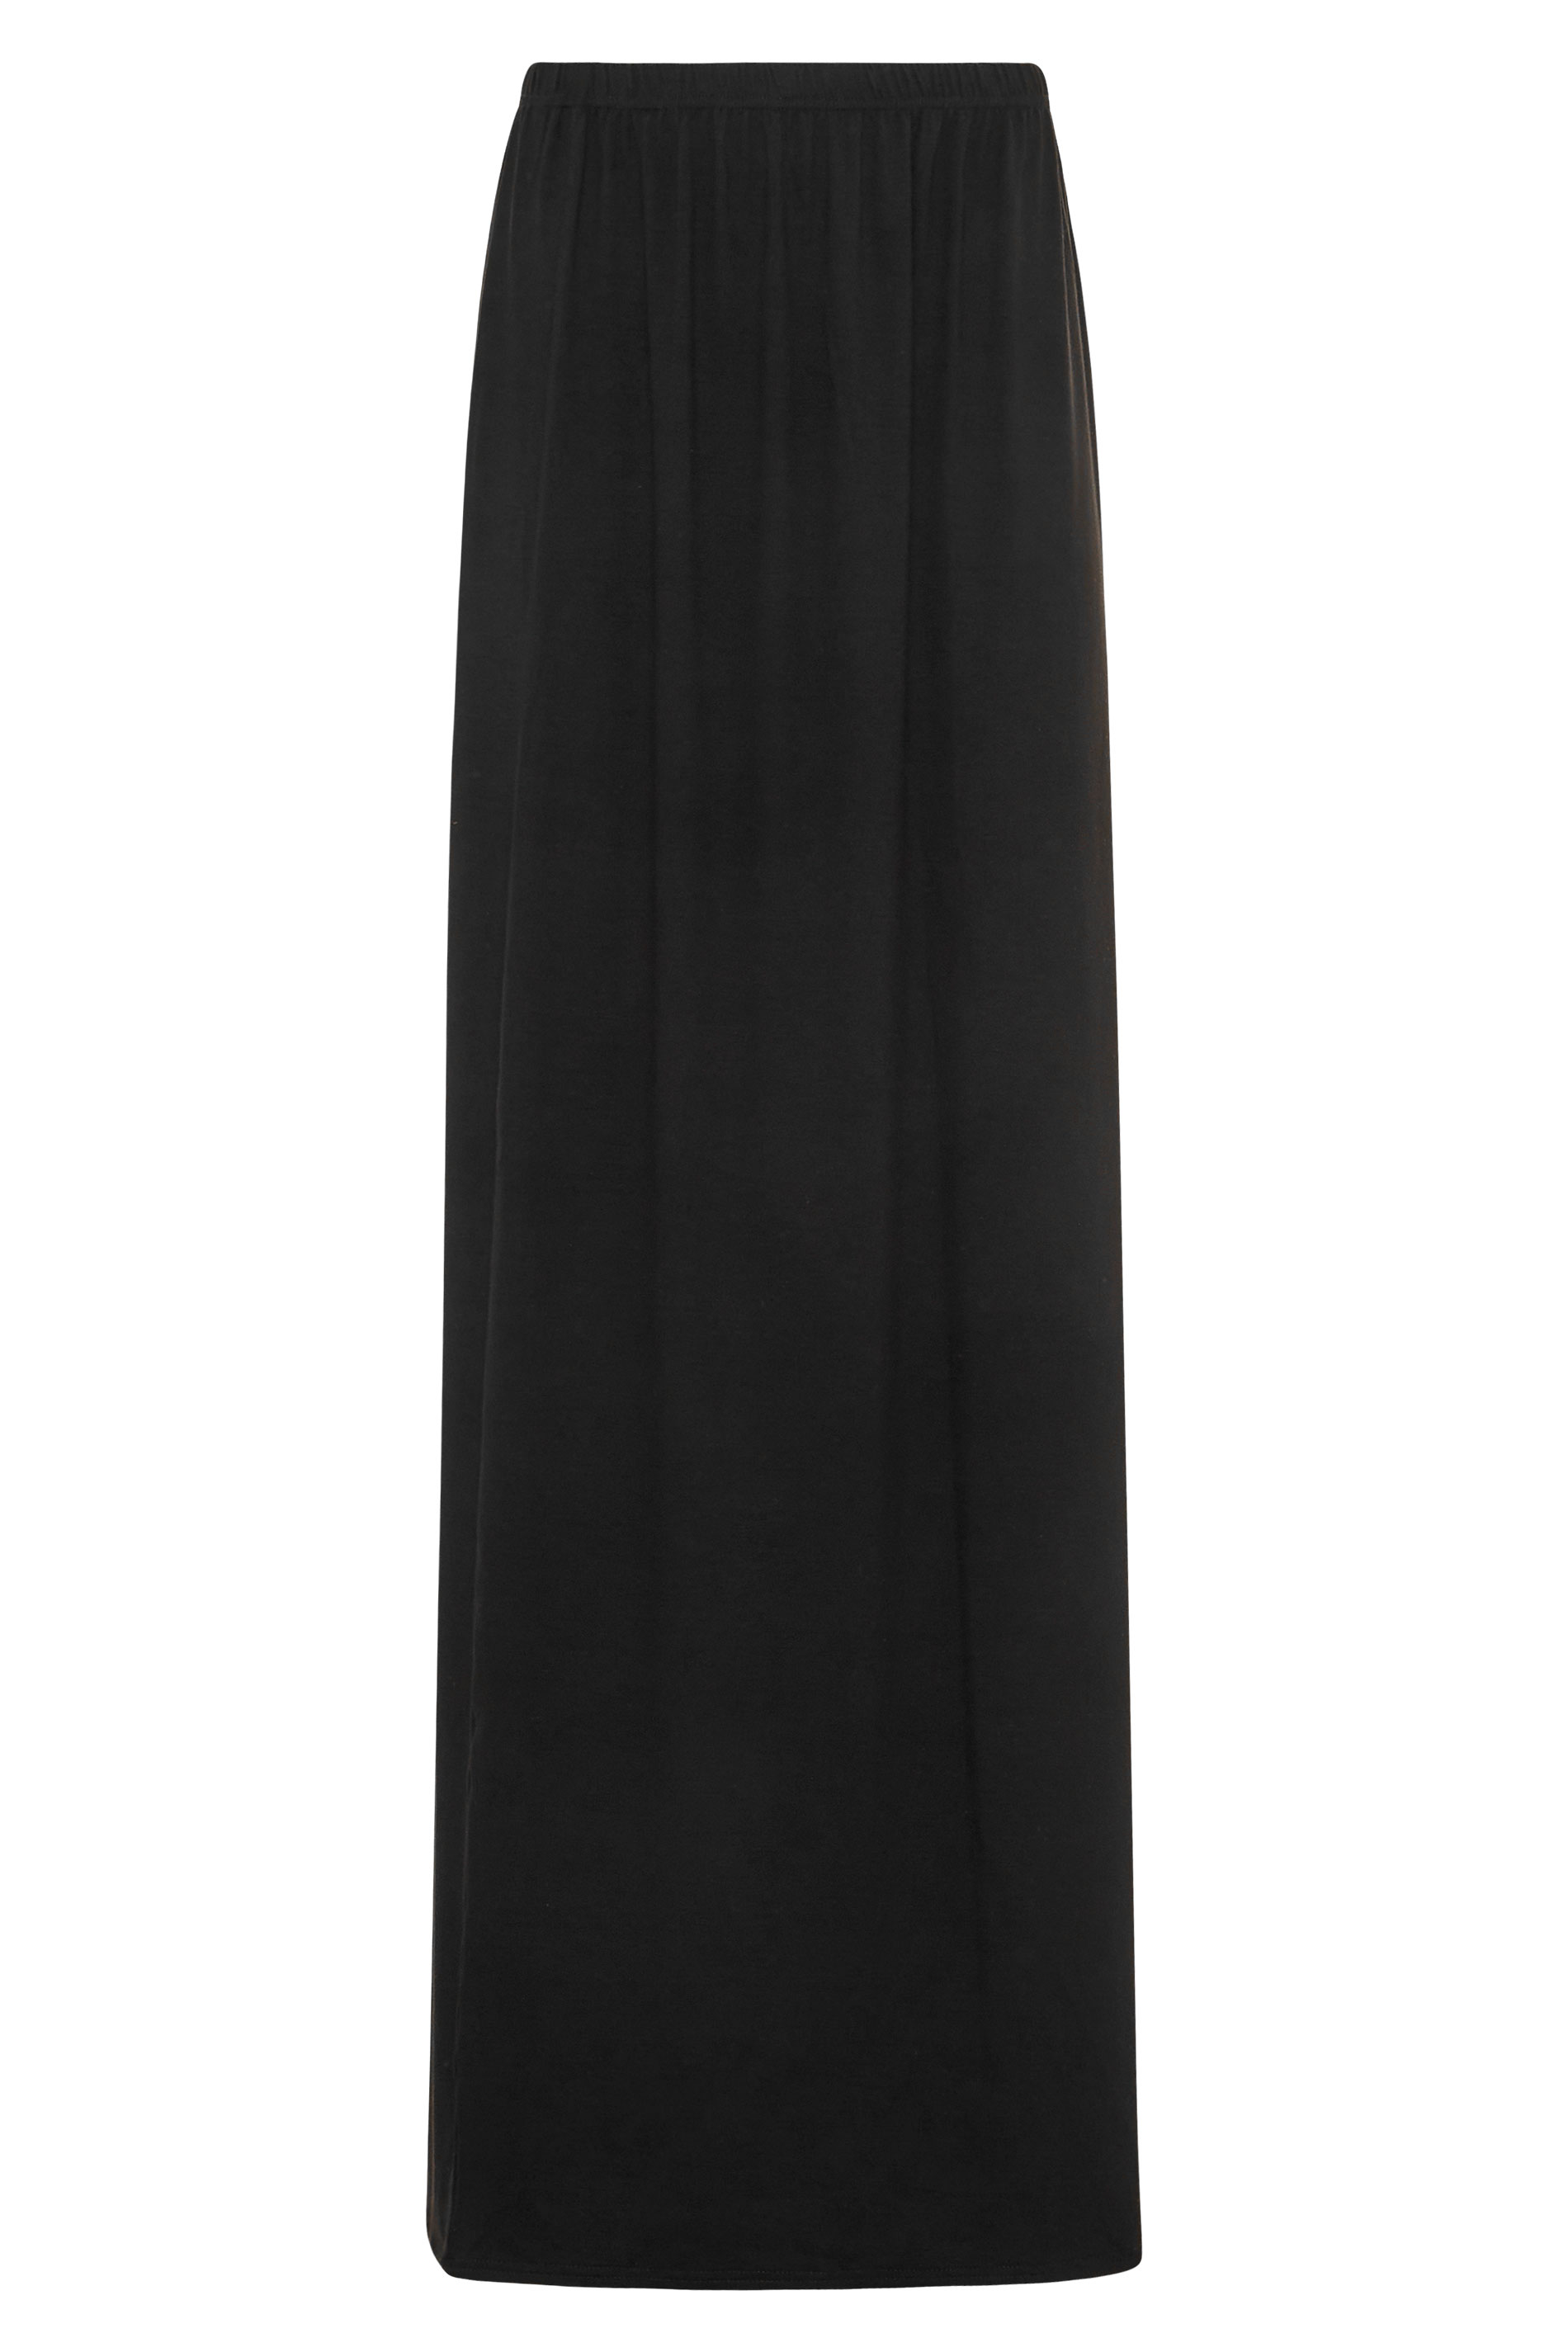 LTS Black Maxi Tube Skirt | Long Tall Sally 3